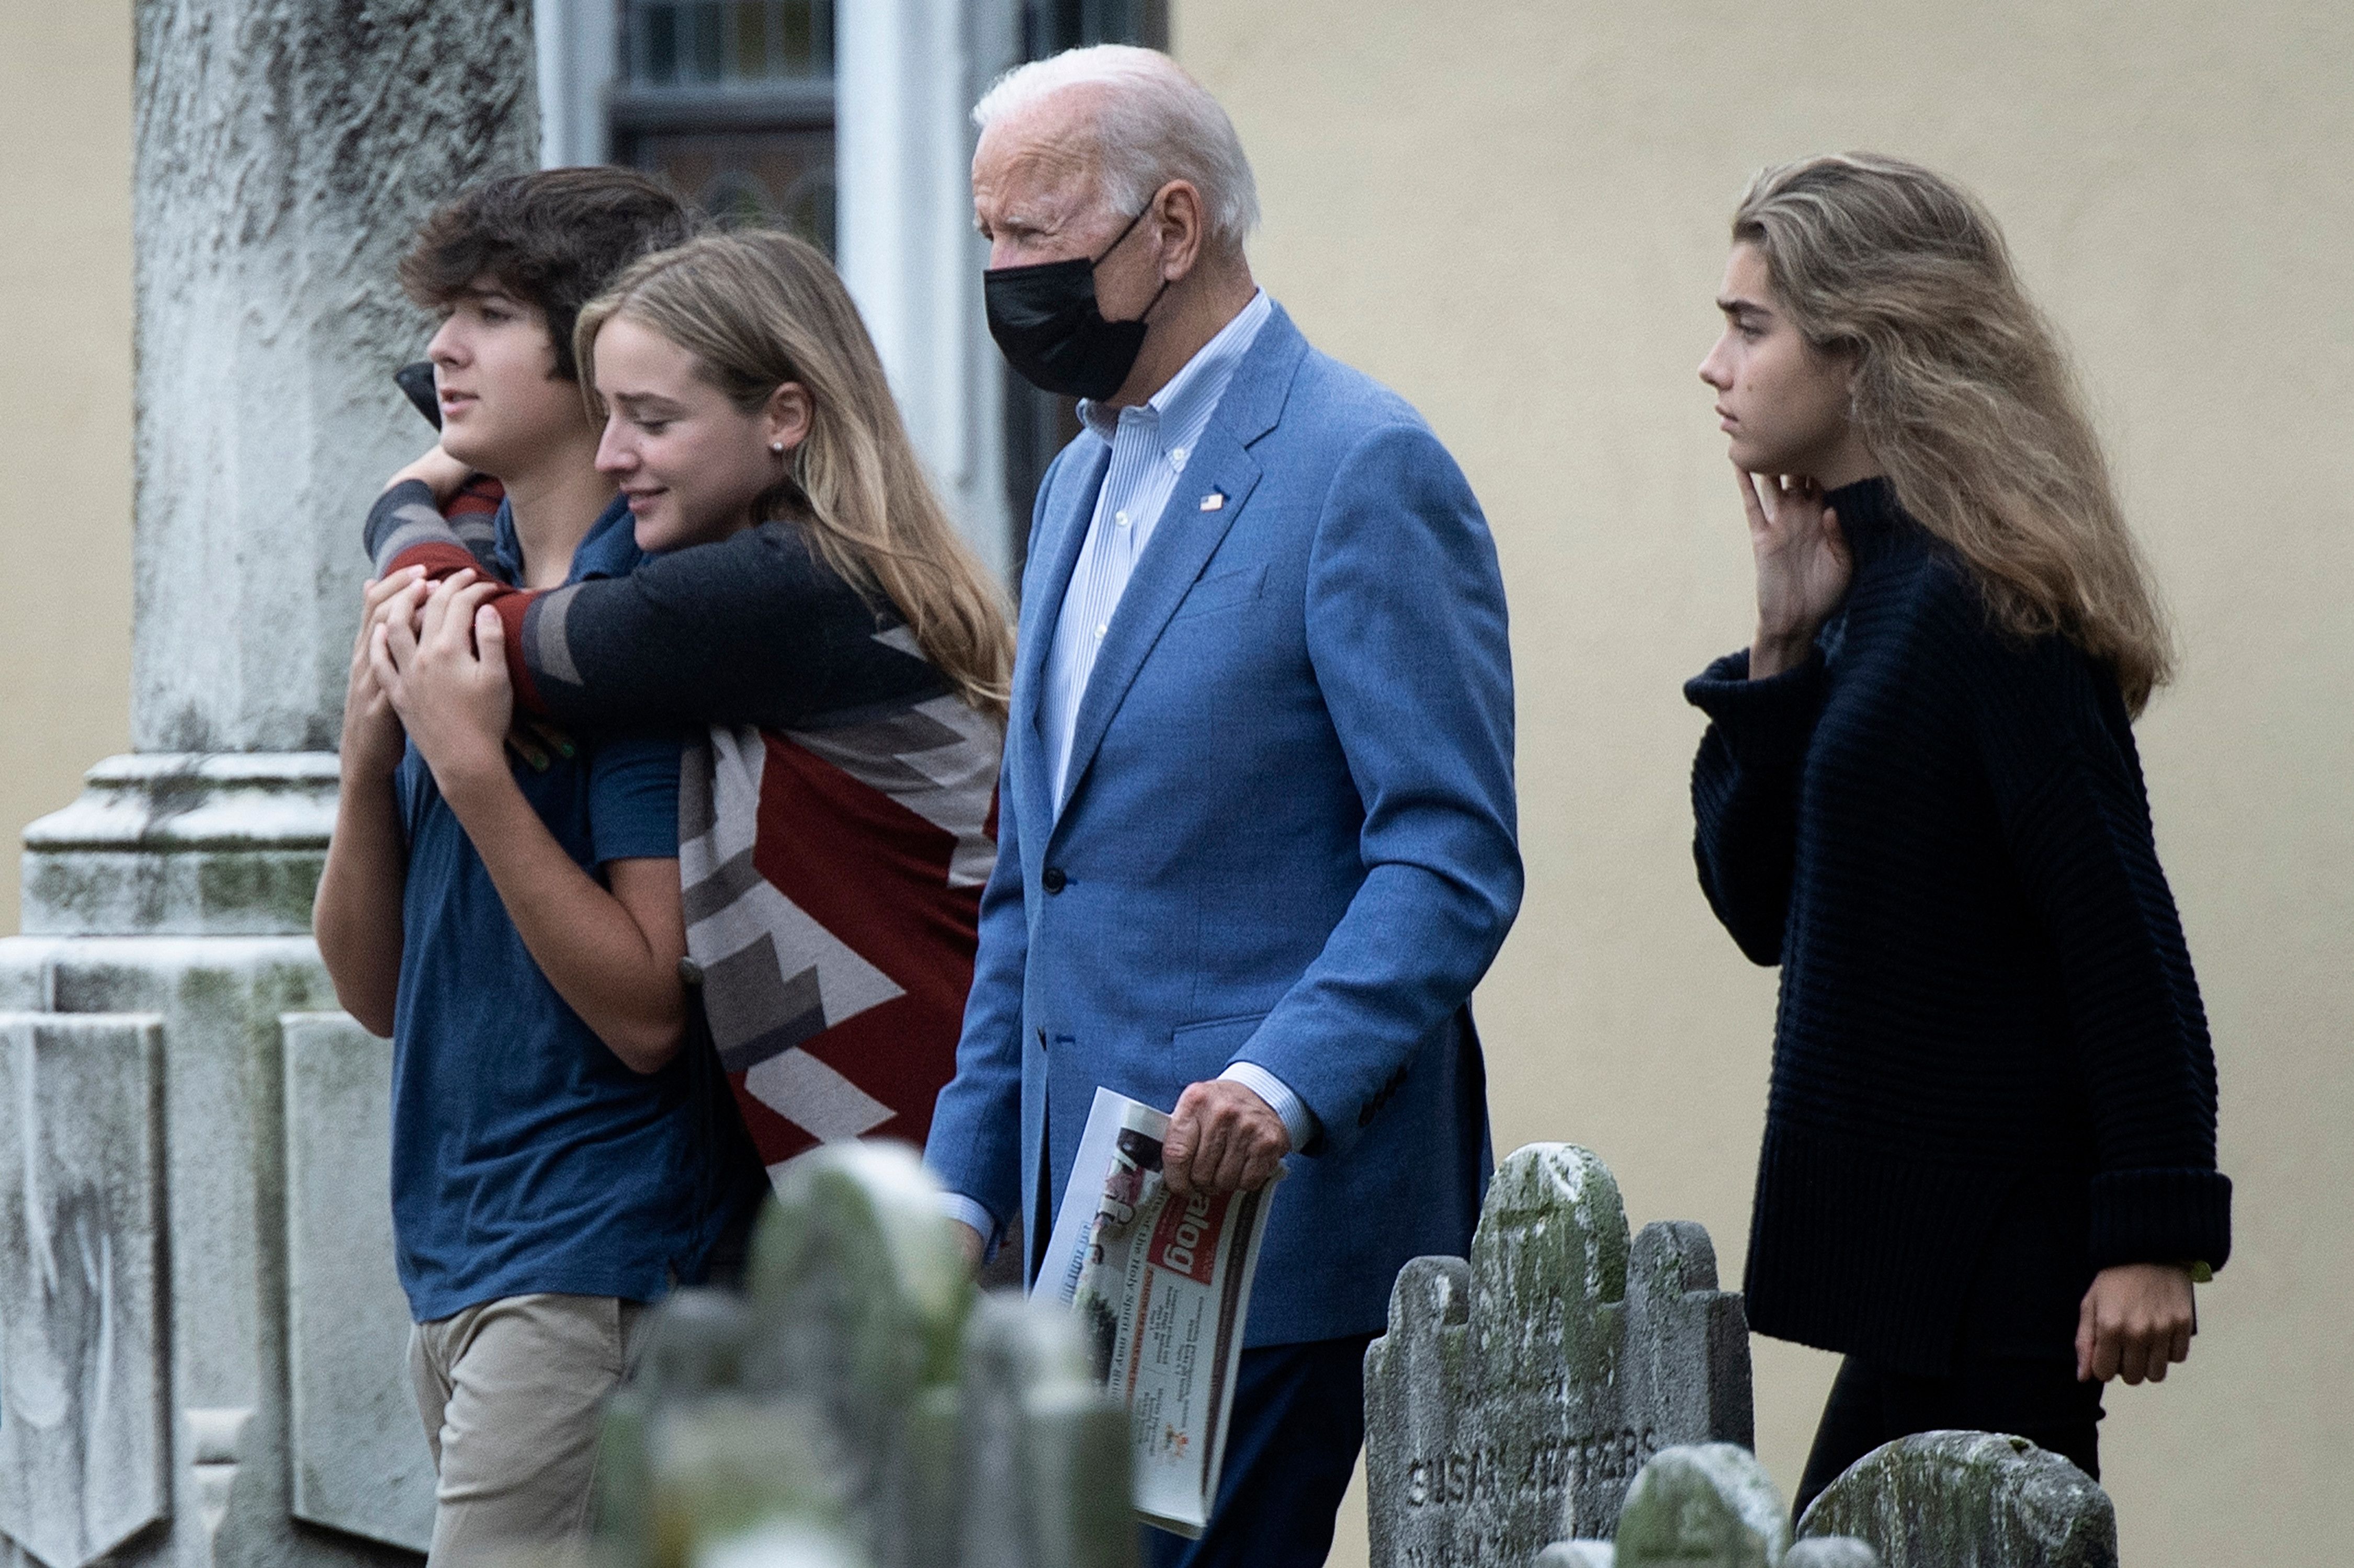 Effektiv erfaring fire gange Who Is Joe Biden's Granddaughter, Natalie Biden? - Facts About Natalie Biden